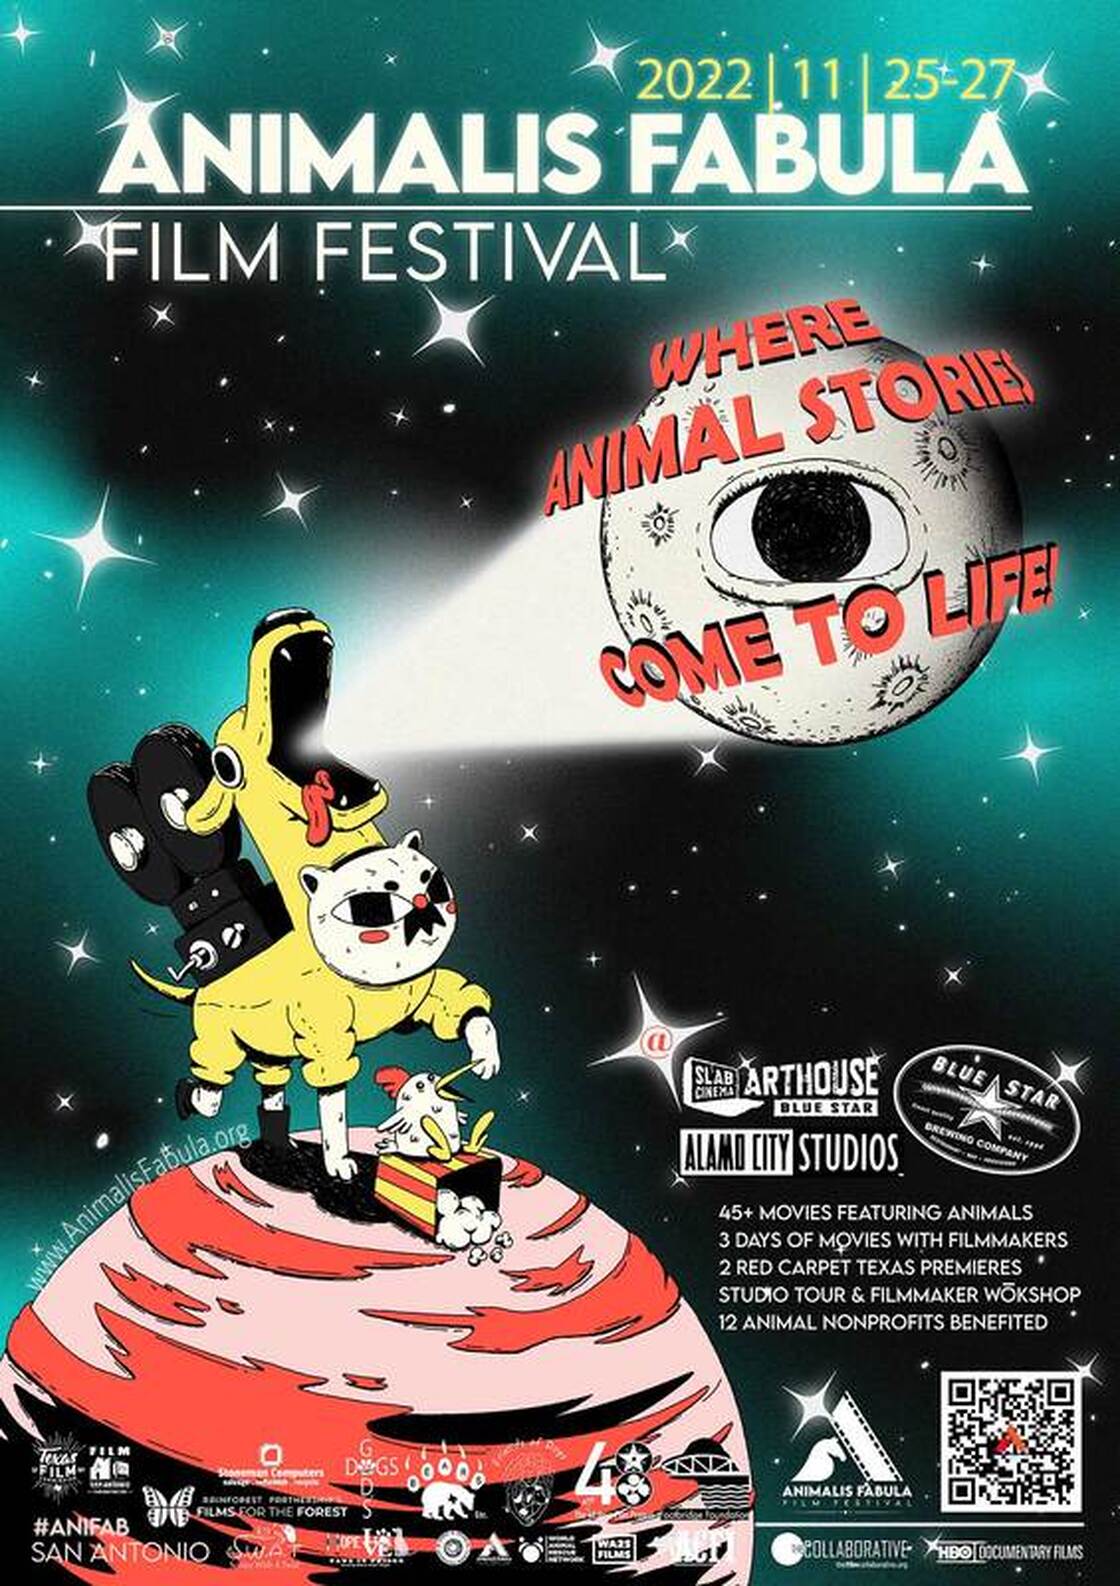 Animalis Fabula Film Festival Official 2022 Poster